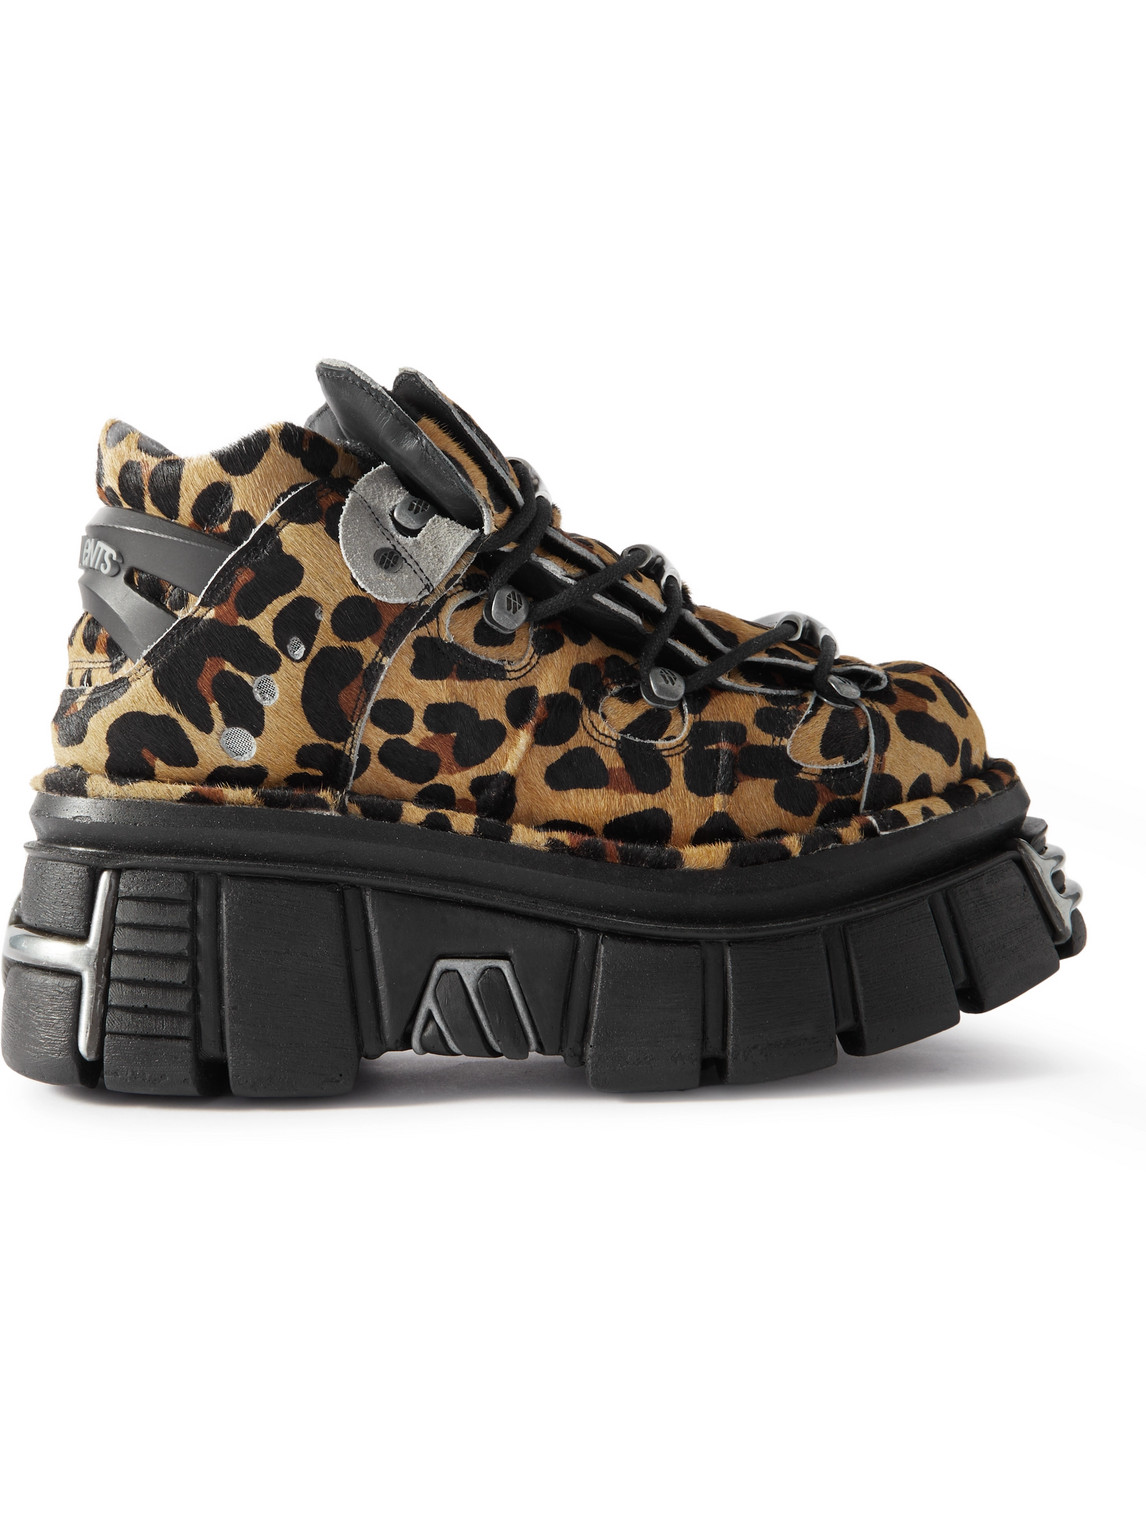 New Rock Embellished Leopard-Print Pony Hair Platform Sneakers